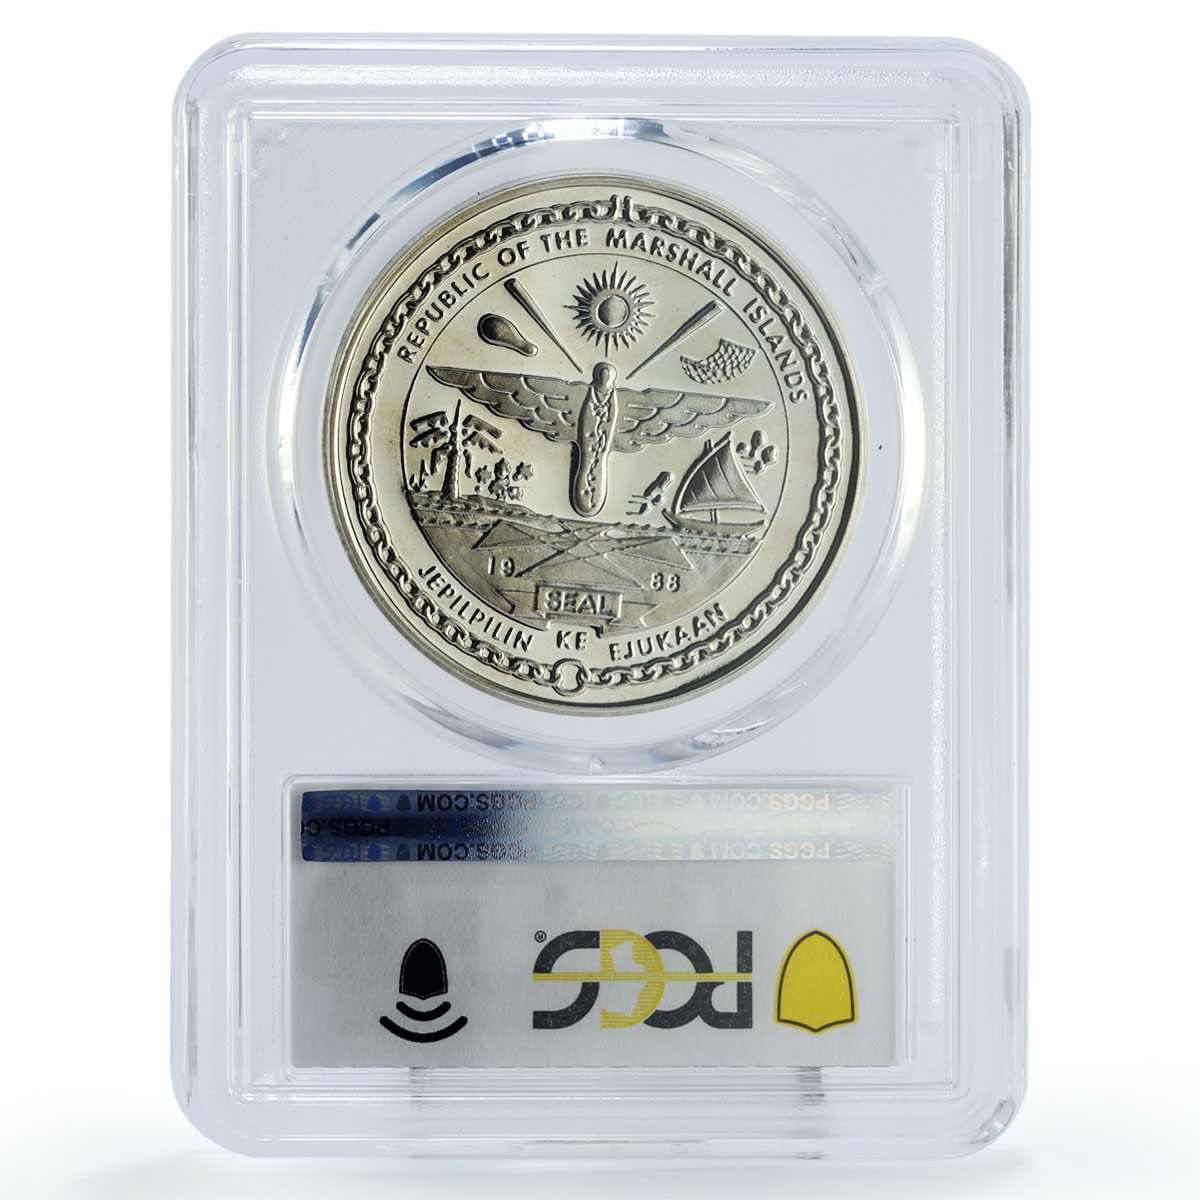 Marshall Islands 25 $ Greg Louganis Jacknife Diving PR67 PCGS silver coin 1988